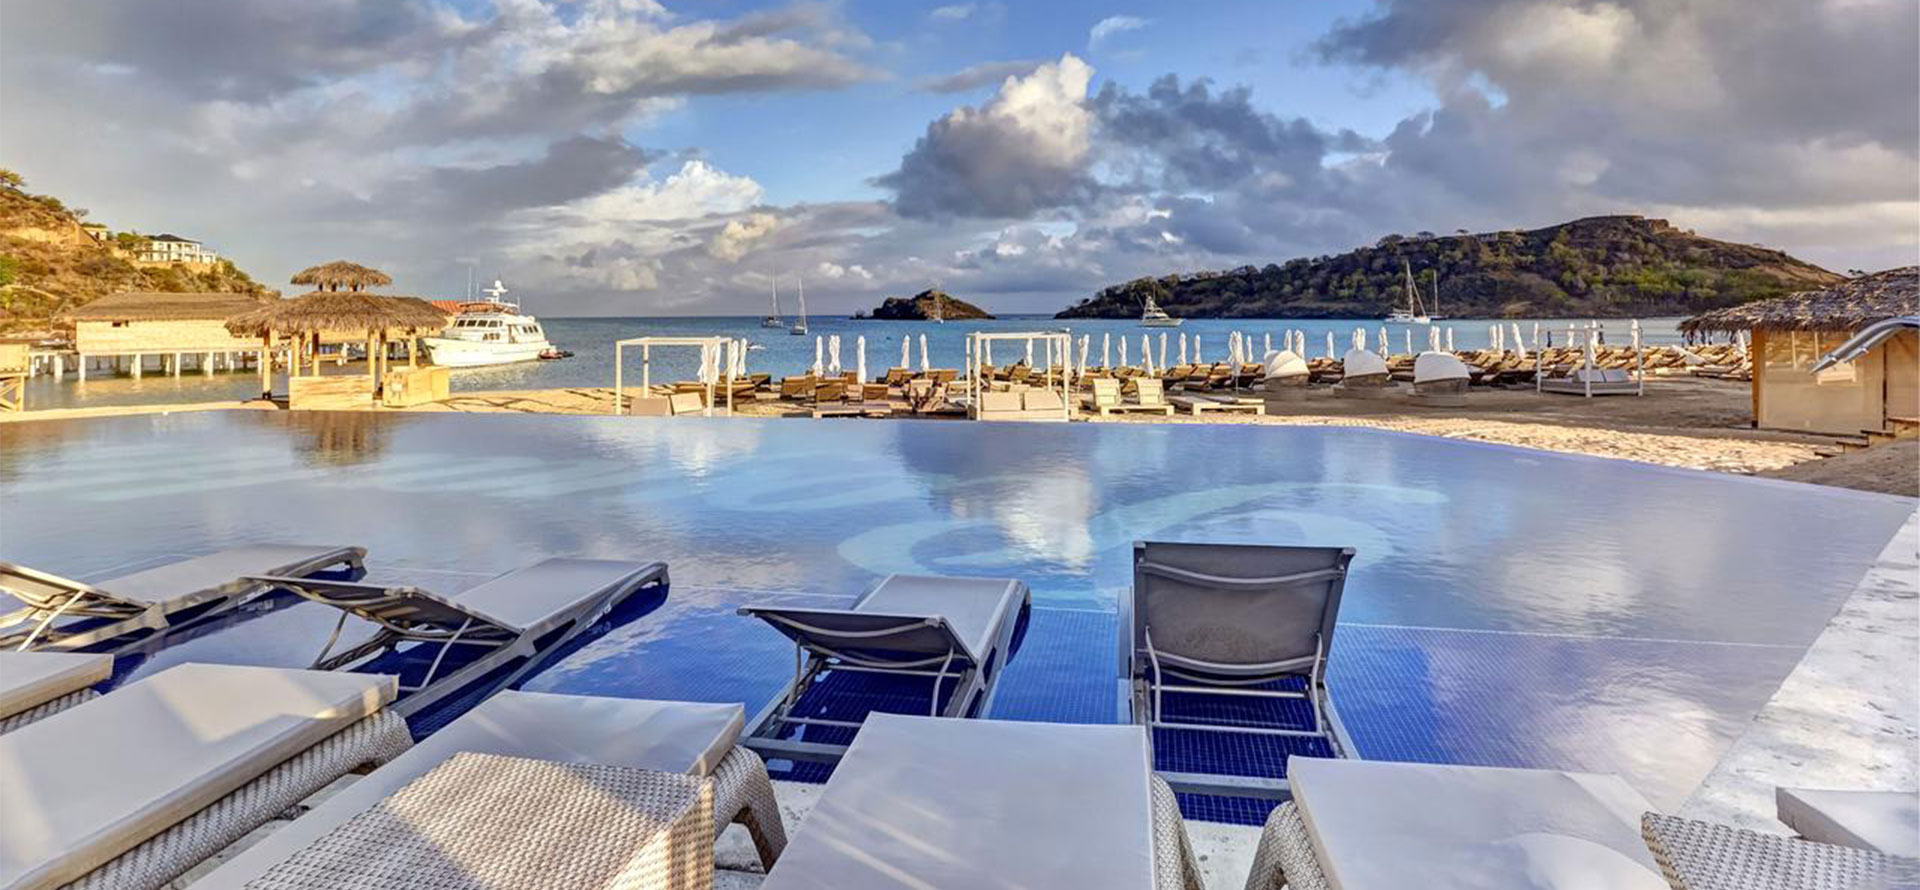 Landscape View of Beautiful Resort in Antigua.